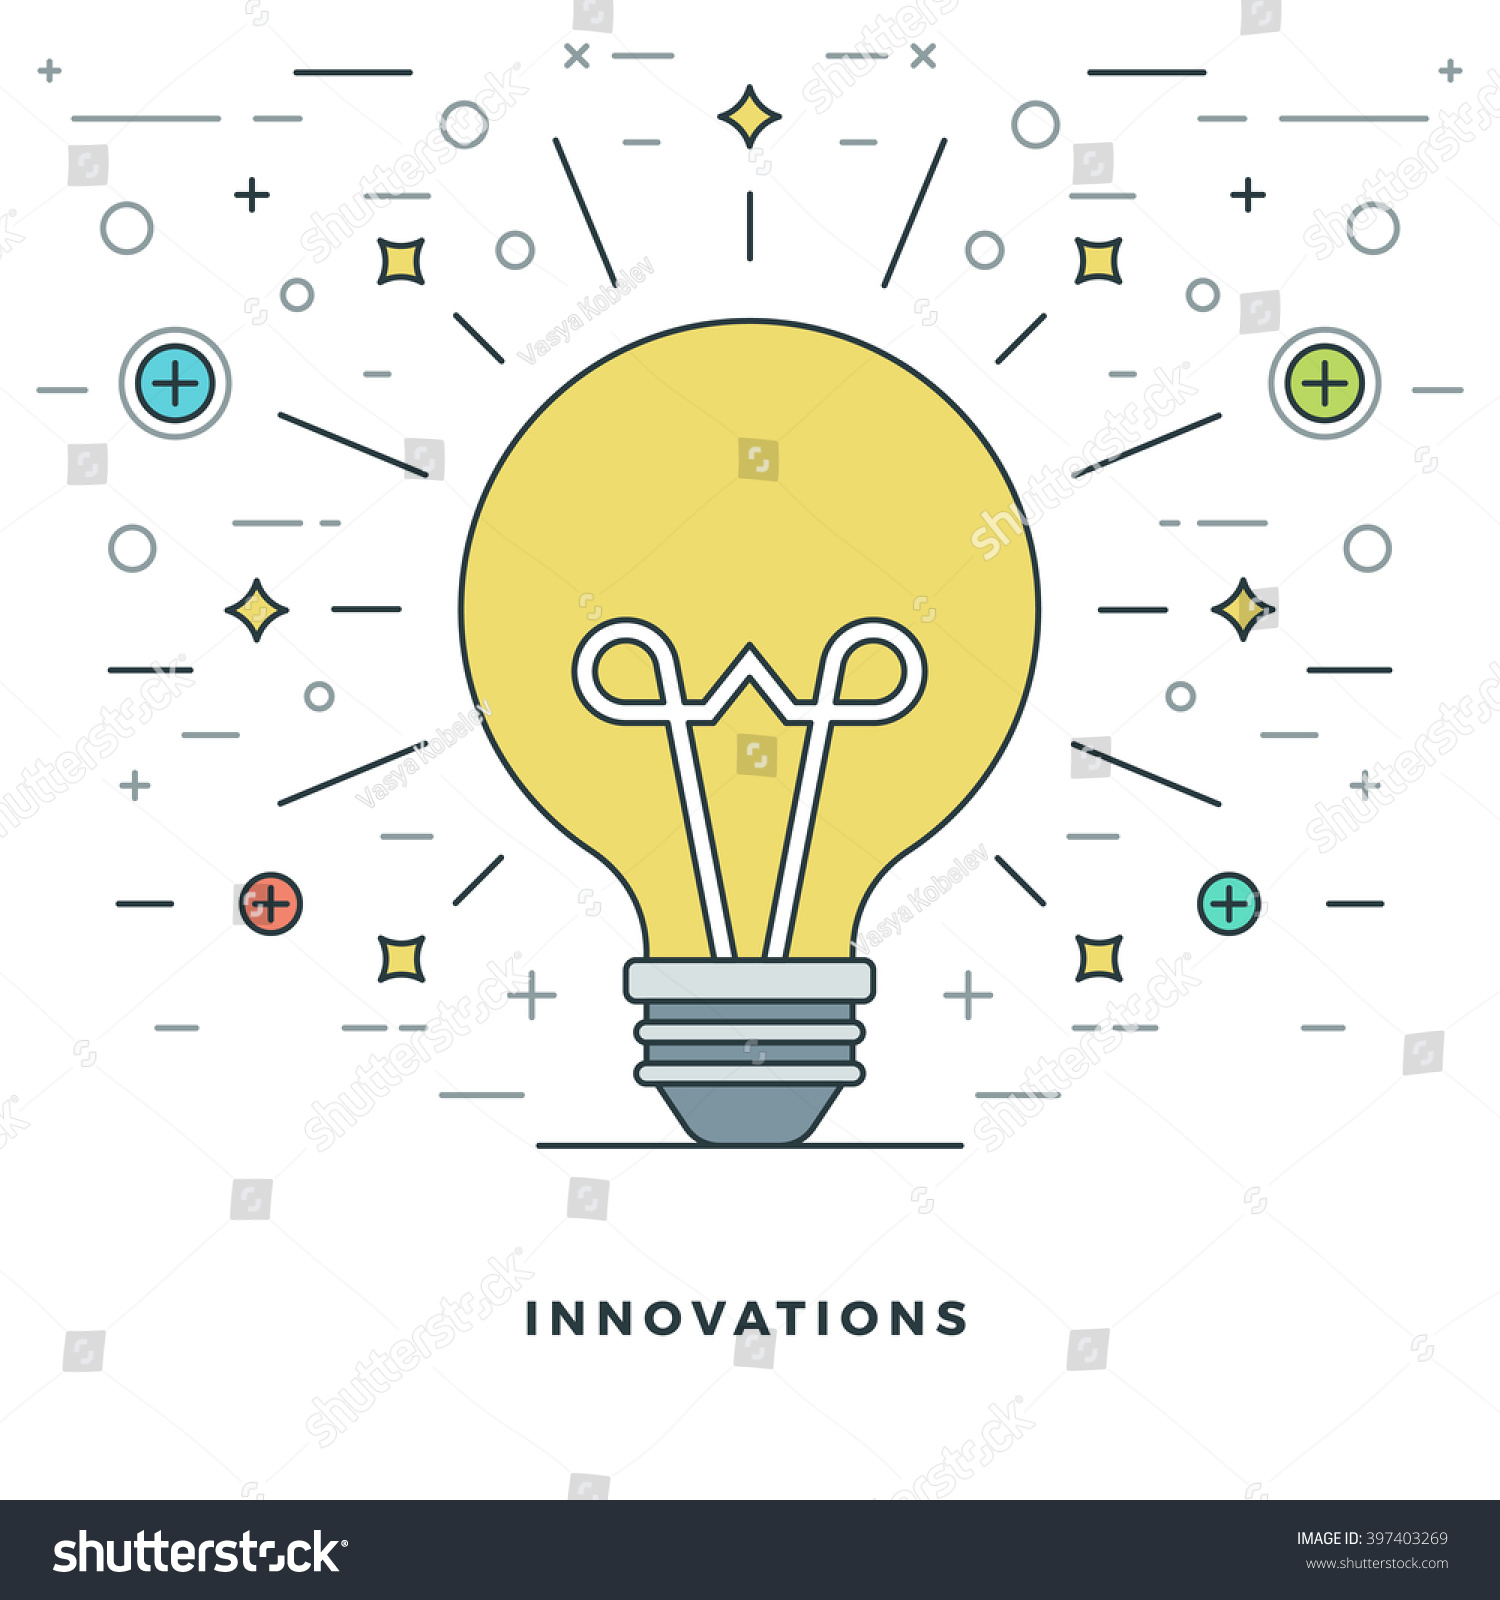 innovation clipart illustrations - photo #15